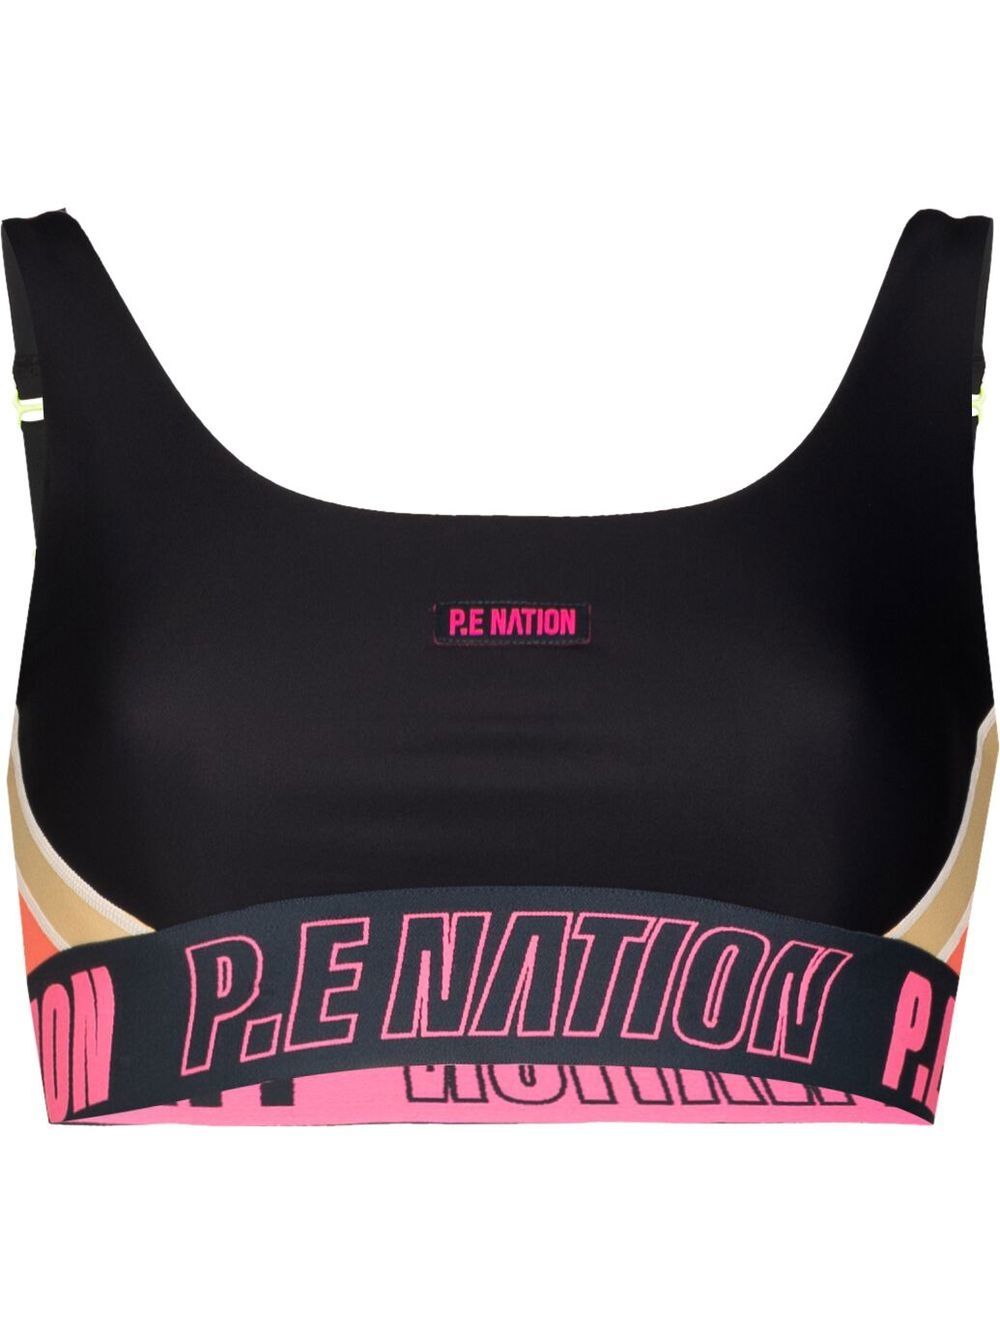 P.E Nation Left Field sports bra - Black